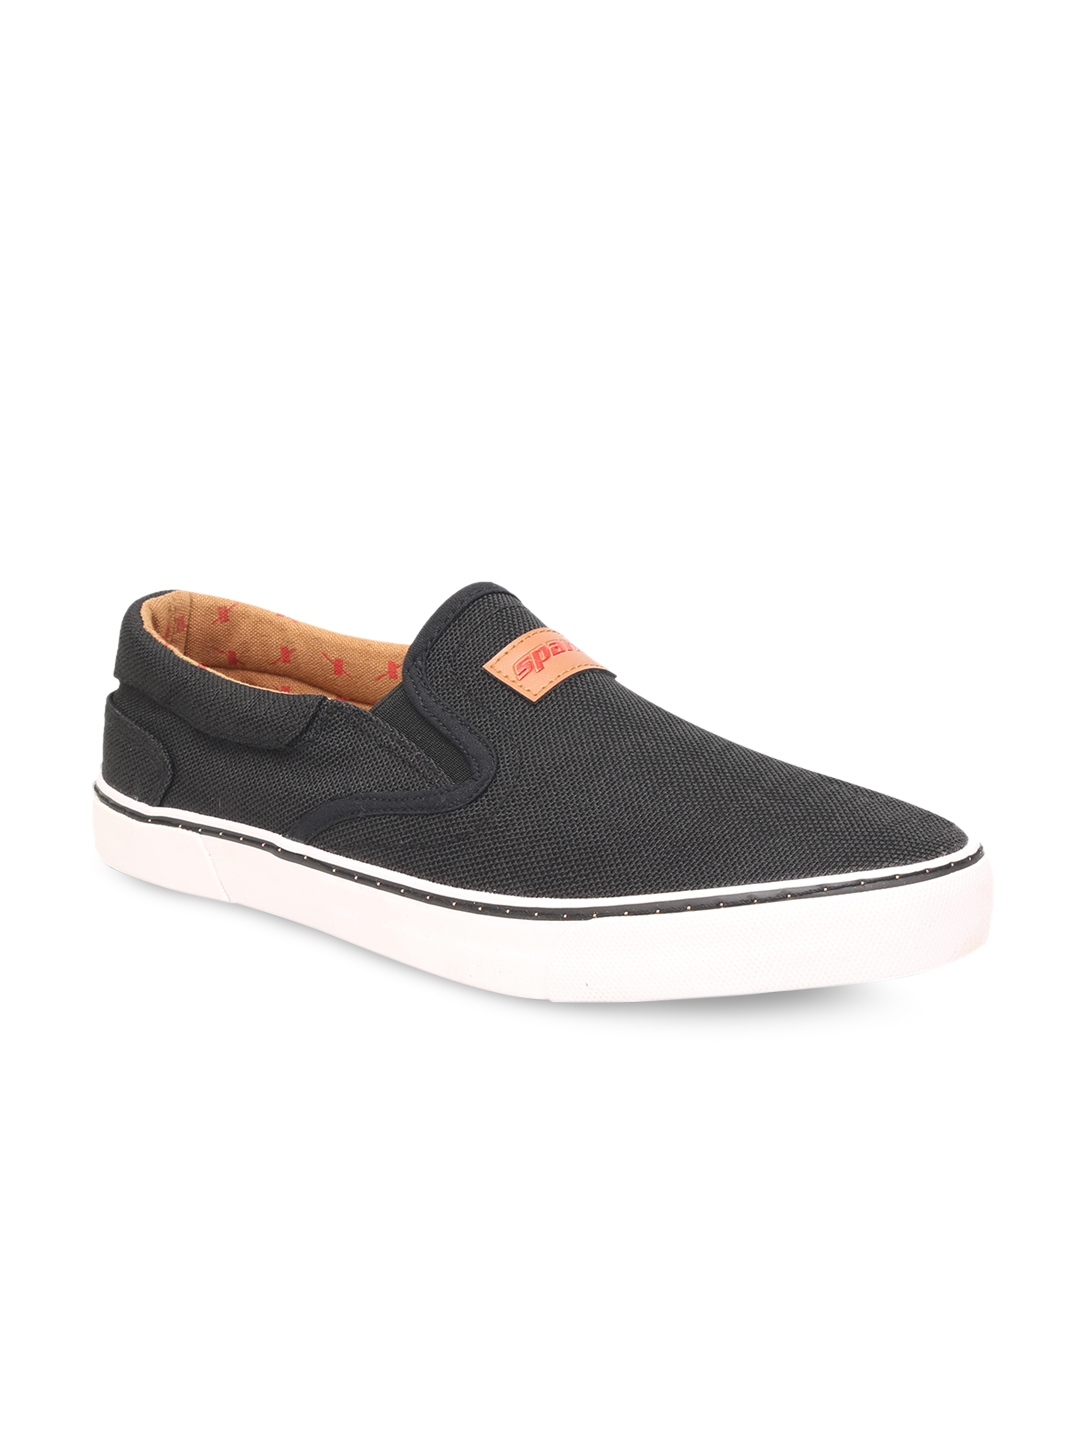 Buy Sparx Men Black Slip On Sneakers - Casual Shoes for Men 11497066 ...